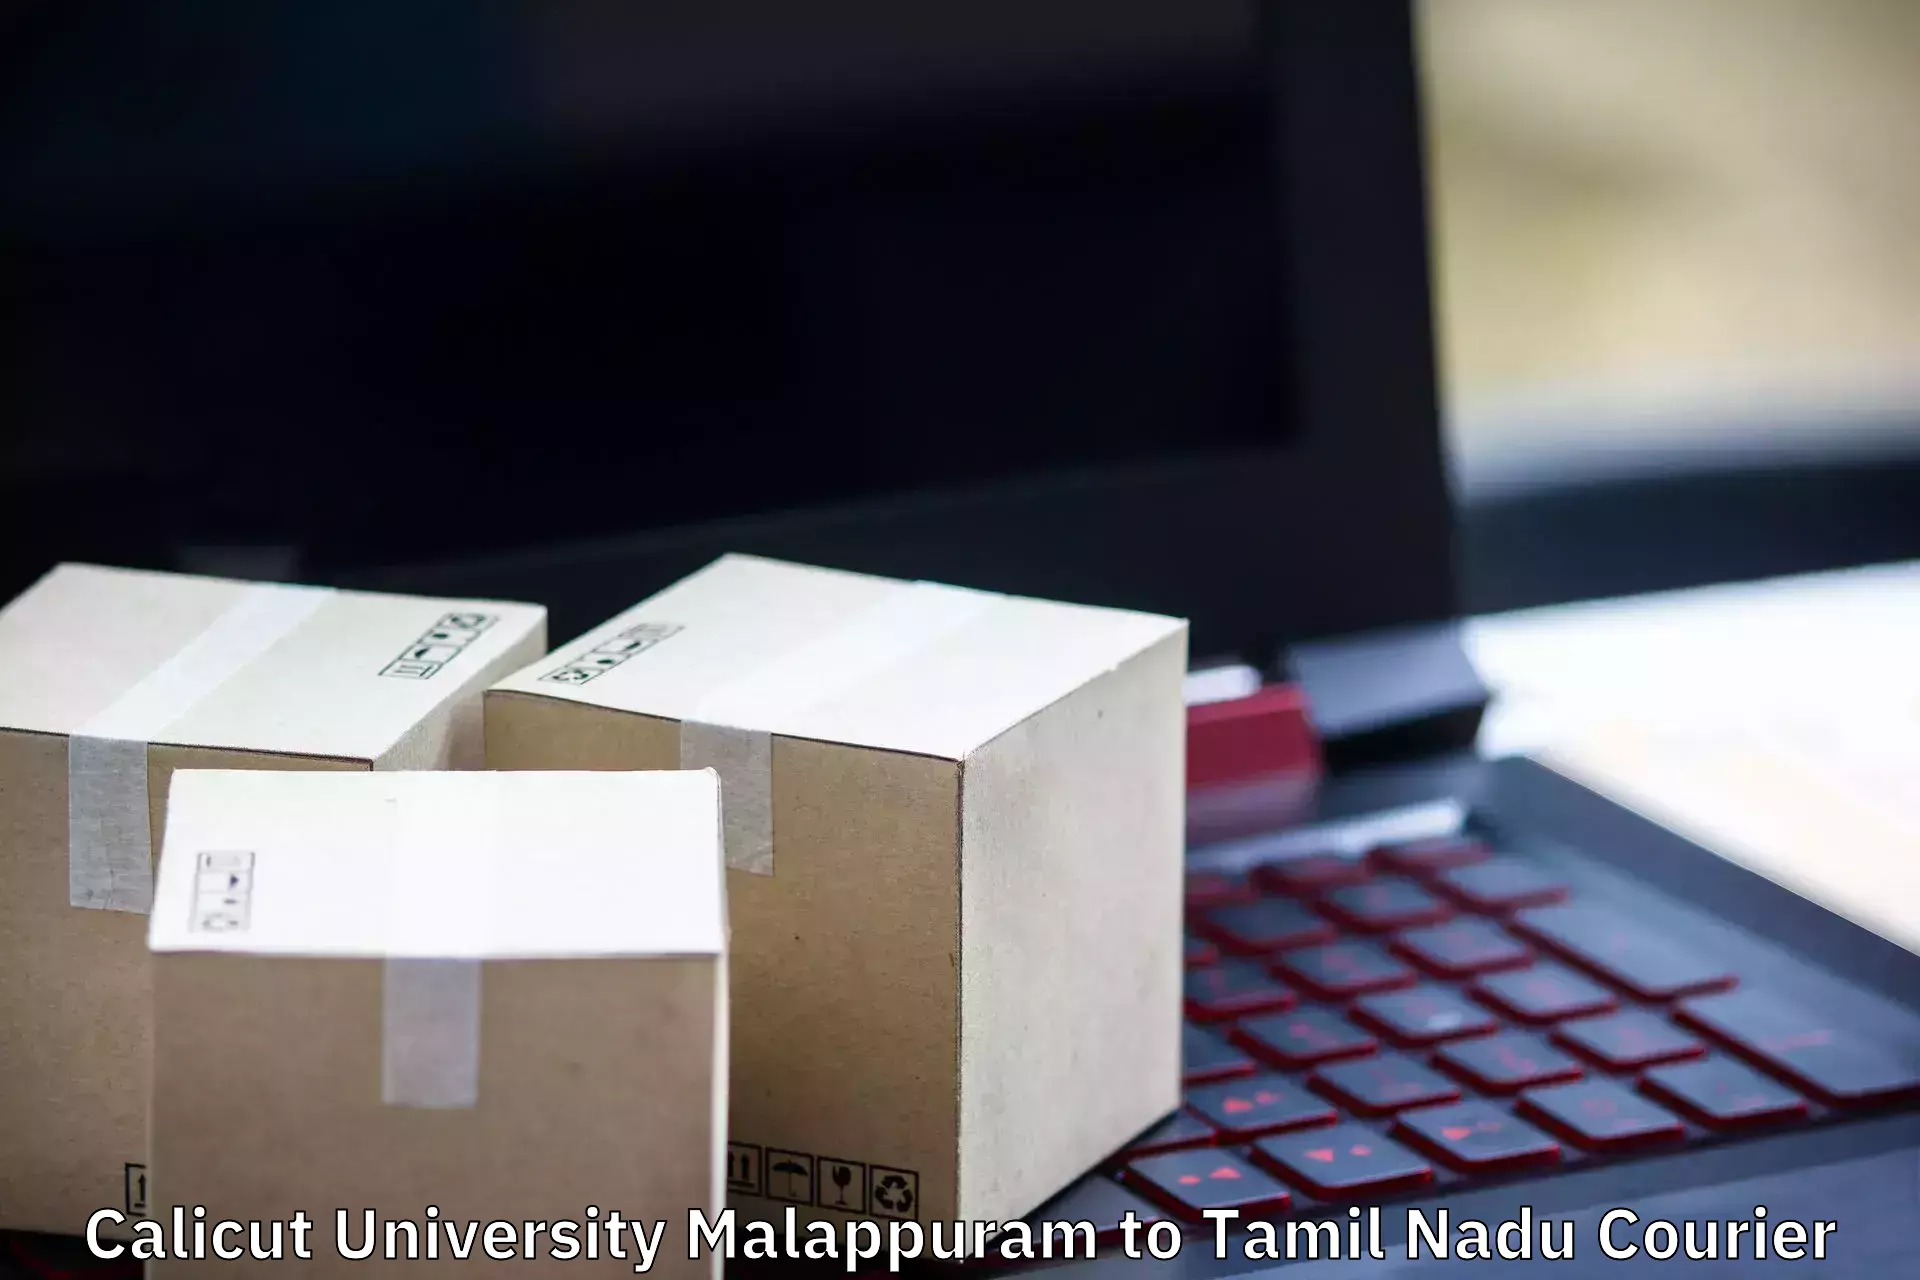 Professional furniture moving Calicut University Malappuram to Vellore Institute of Technology